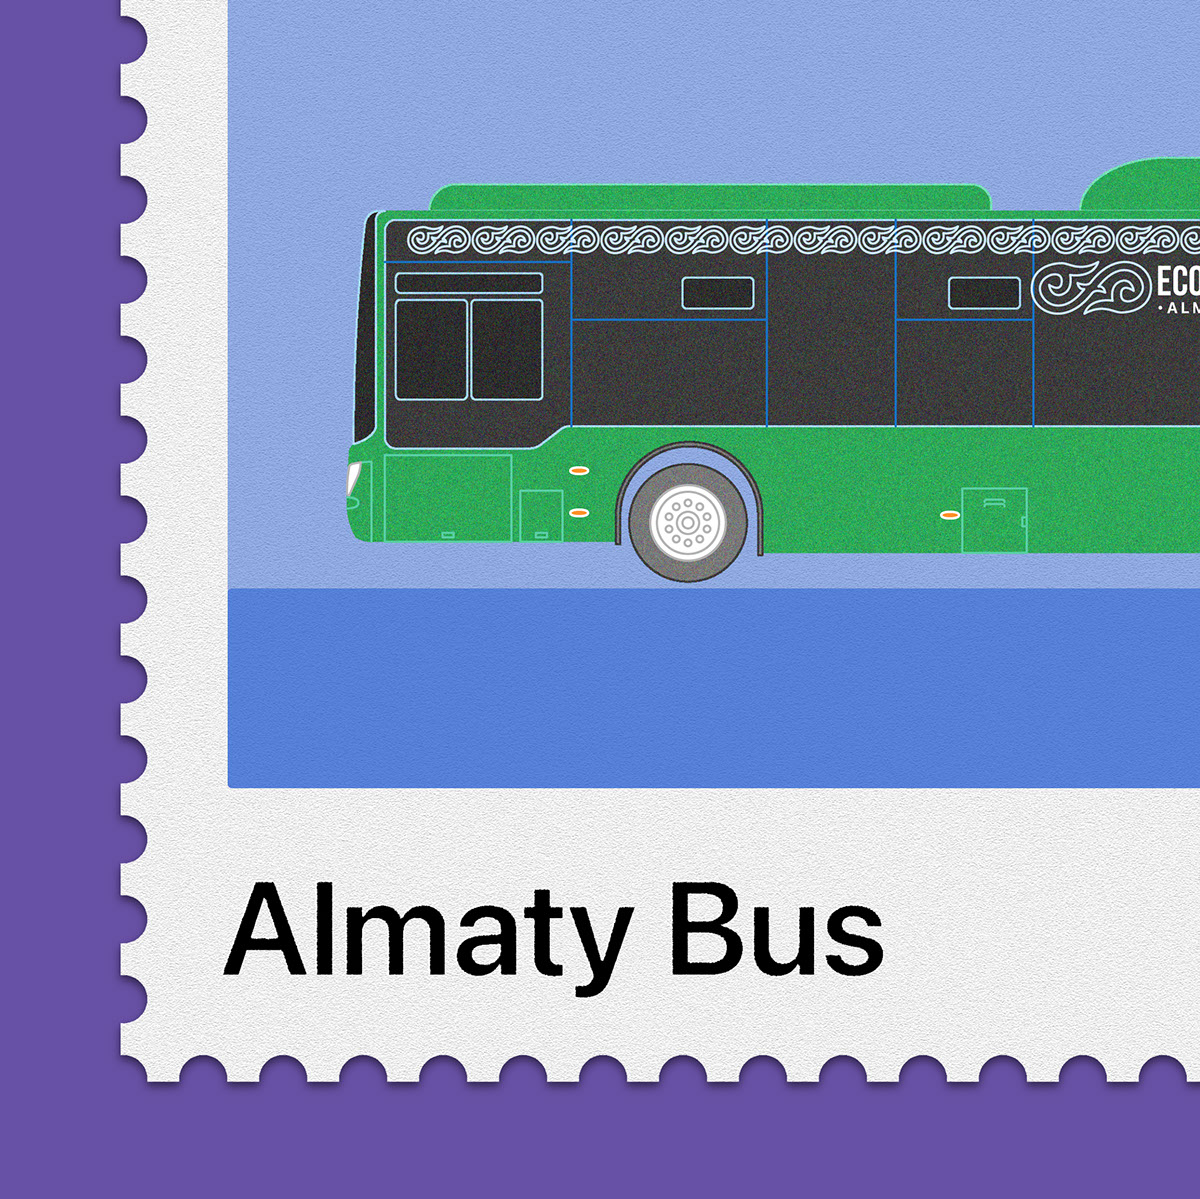 Almaty Bus rendition image